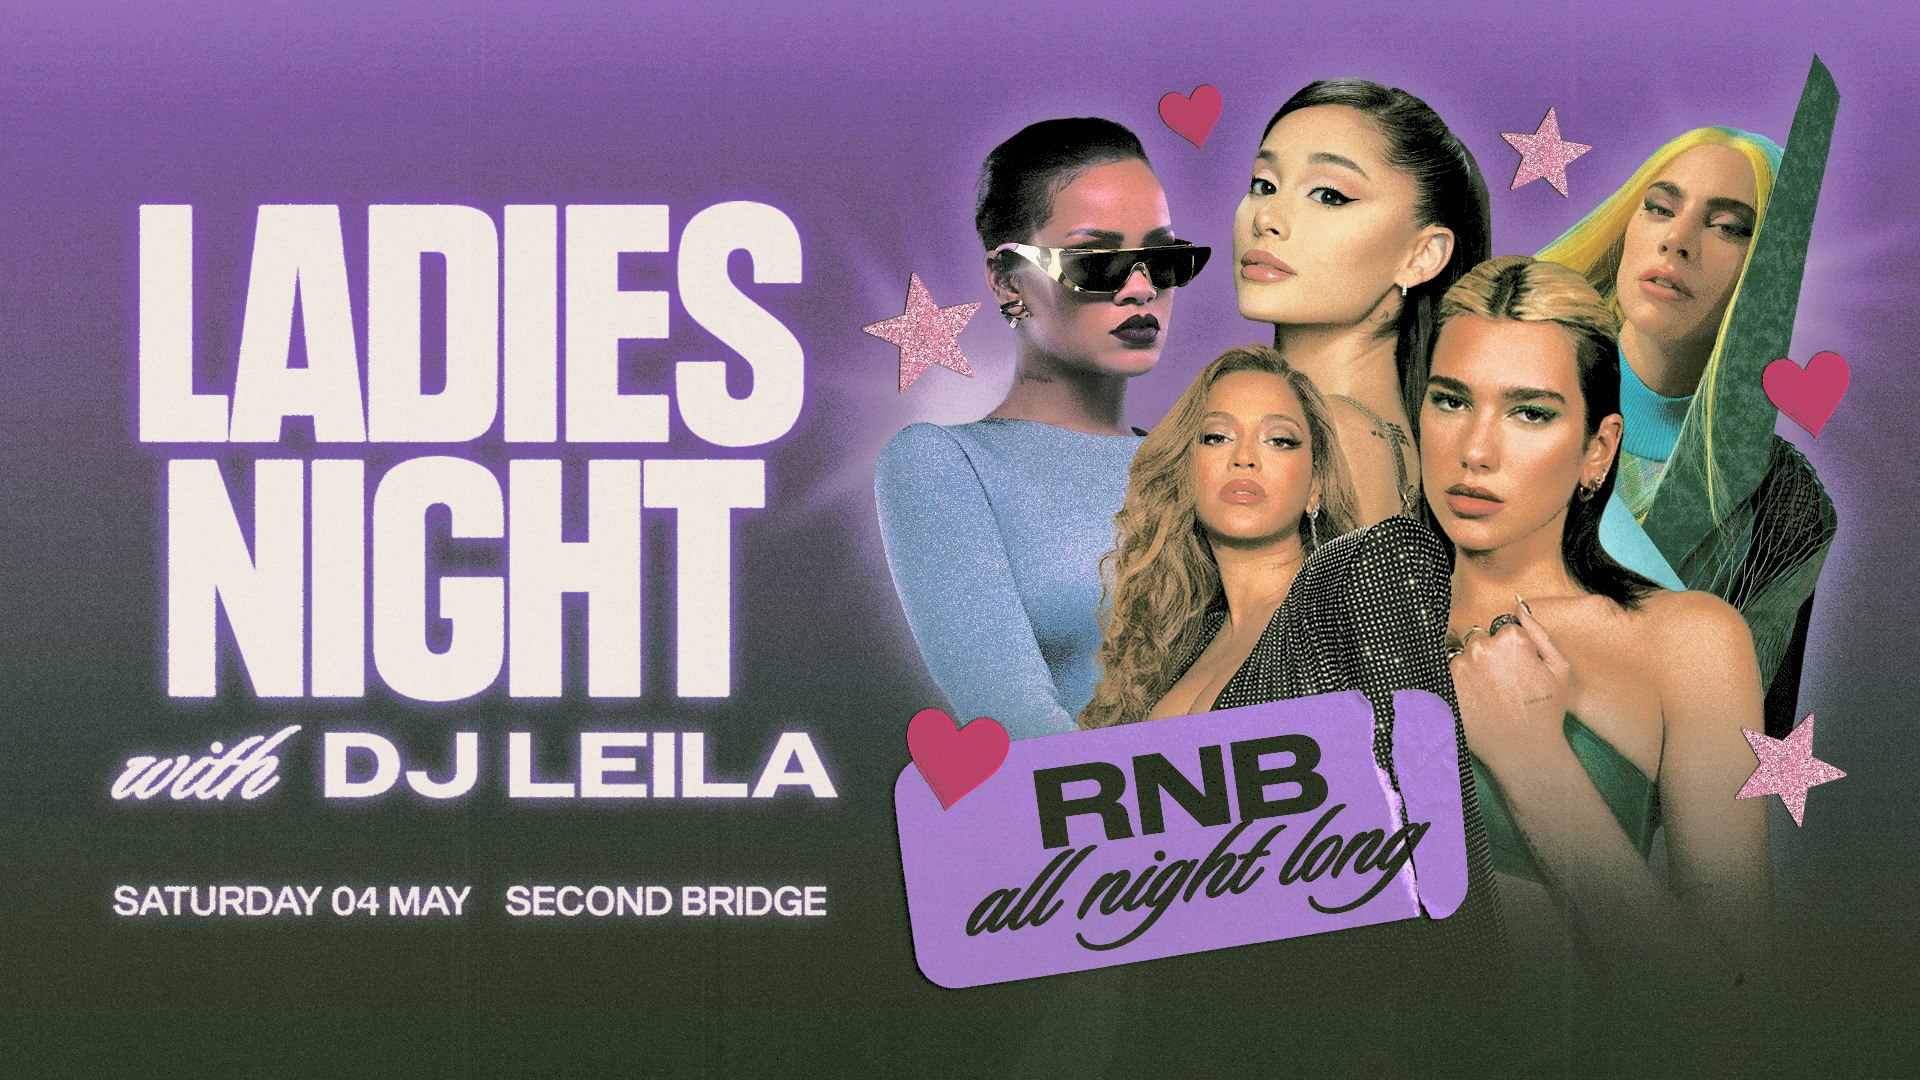 Bridge Saturday: Ladies Night w. DJ LEILA (RNB & More)